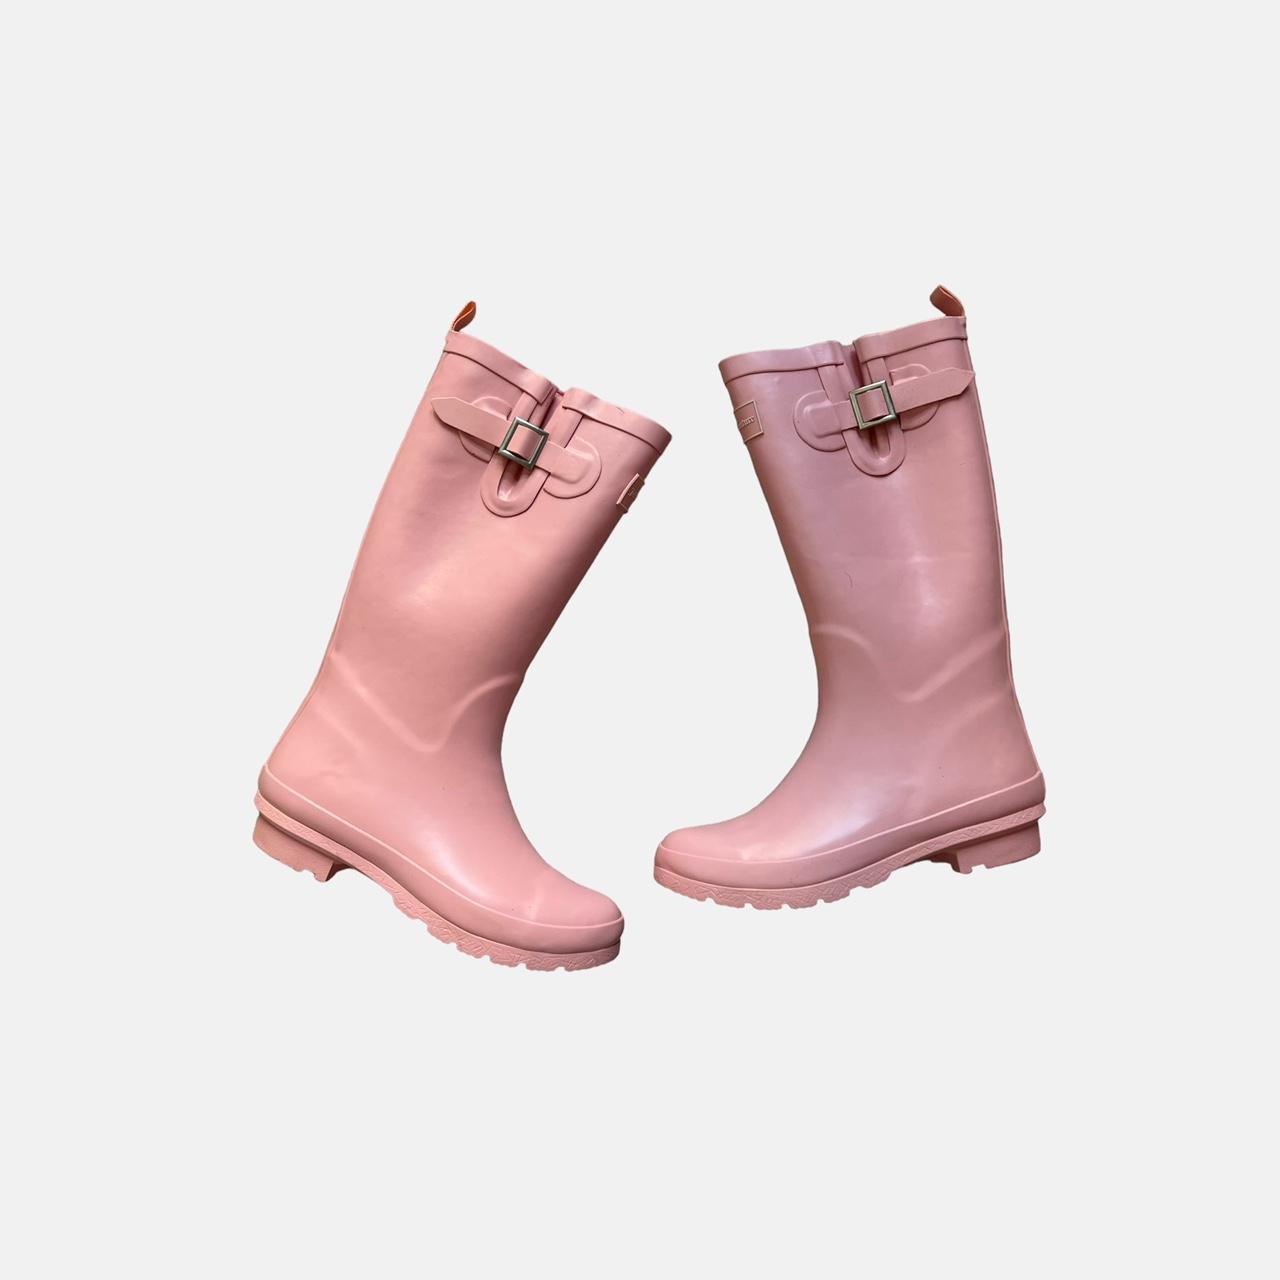 Juicy couture light pink Wellington boots 🎀 brand... - Depop